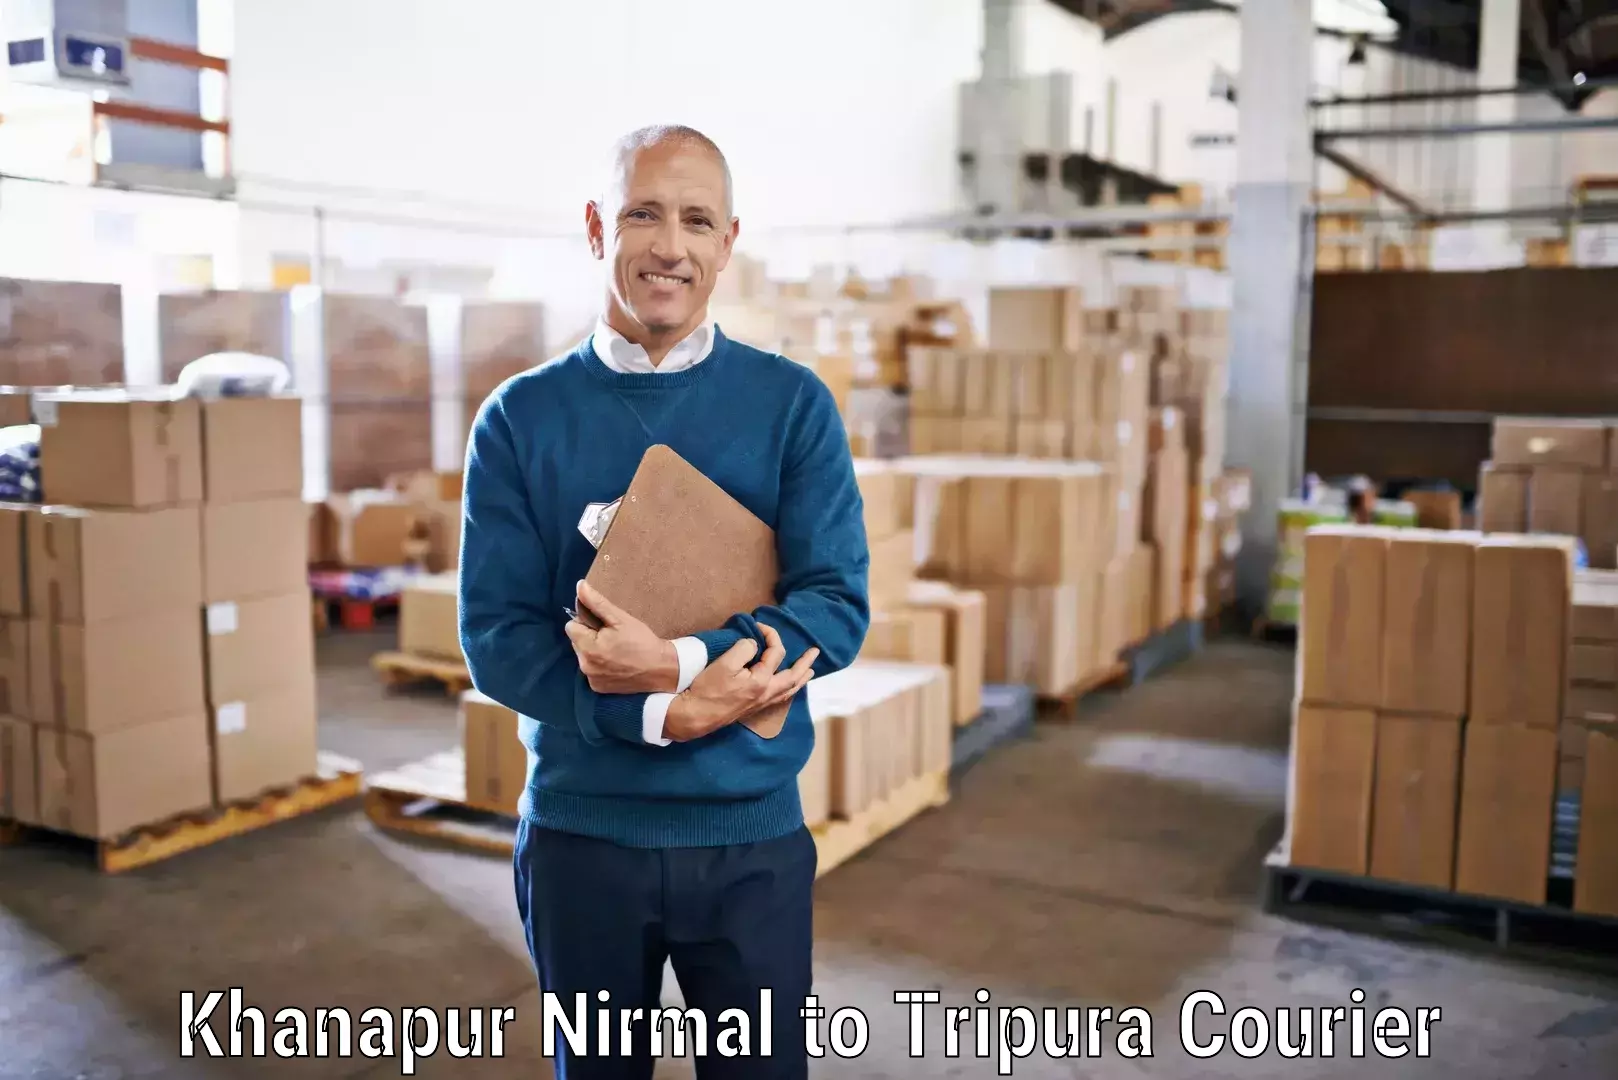 Urgent courier needs Khanapur Nirmal to Udaipur Tripura